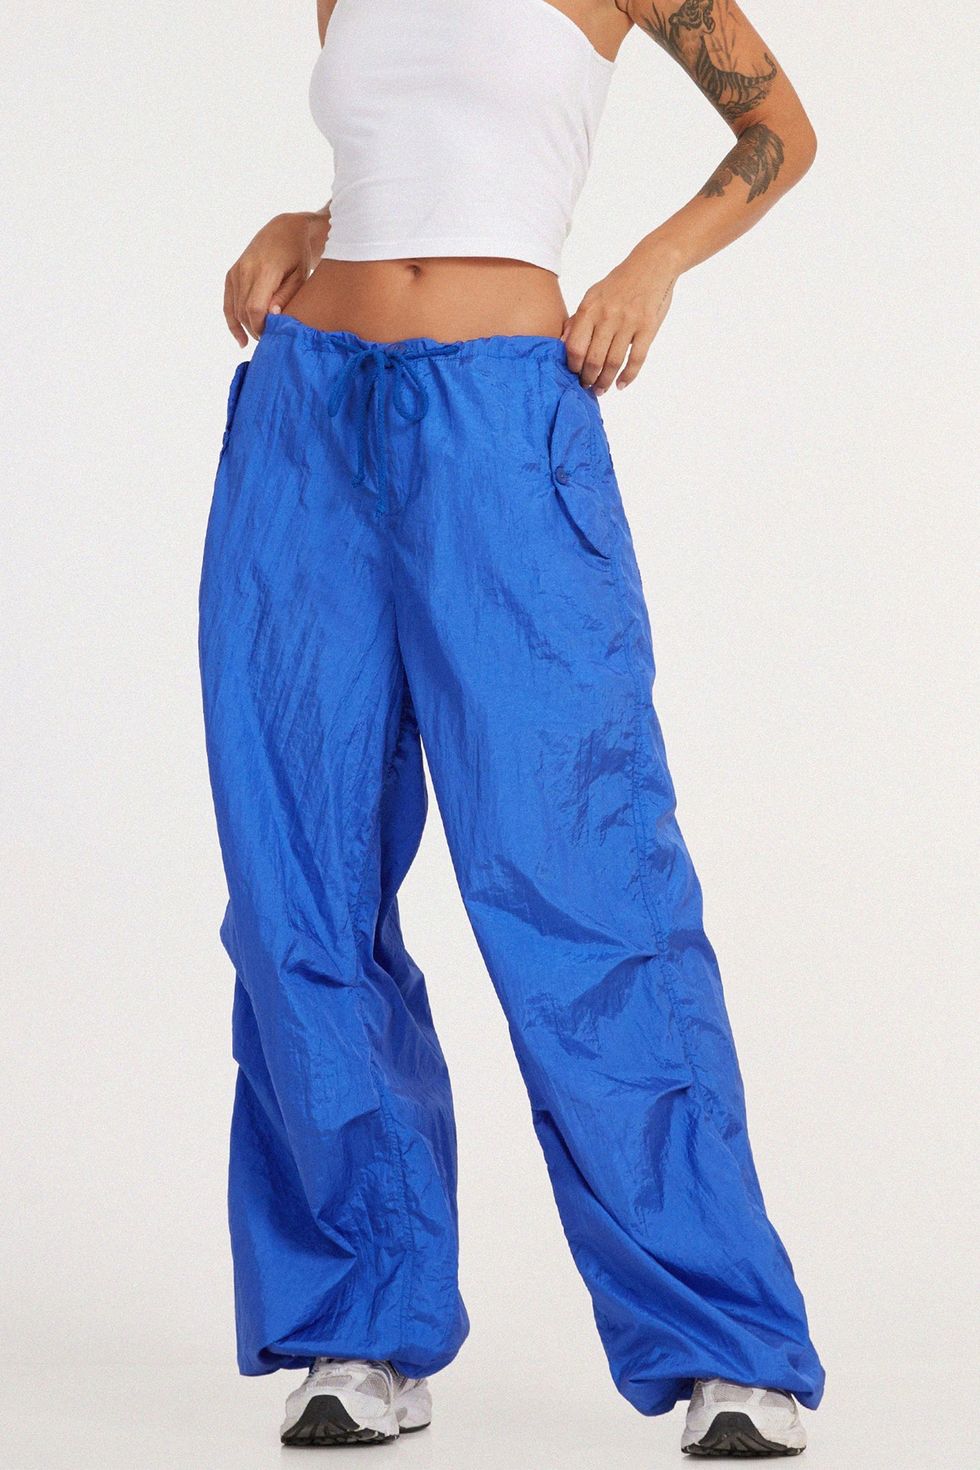 Cargo Pants Women Baggy Parachute Pants for Women Trendy Y2K Pants